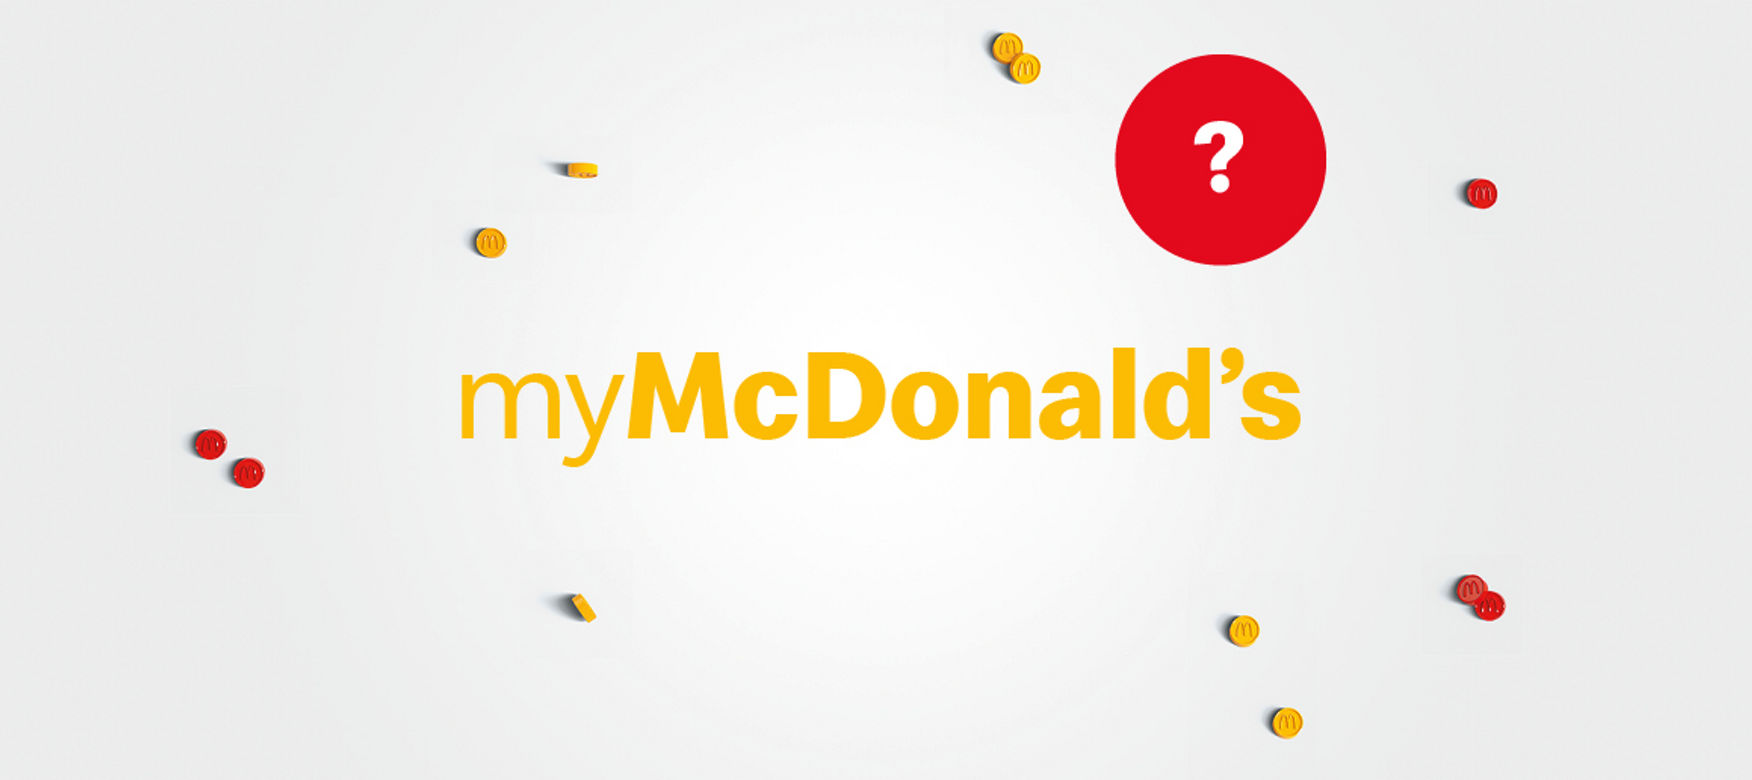 Hast du noch Fragen zum myMcDonald's Bonusprogramm?